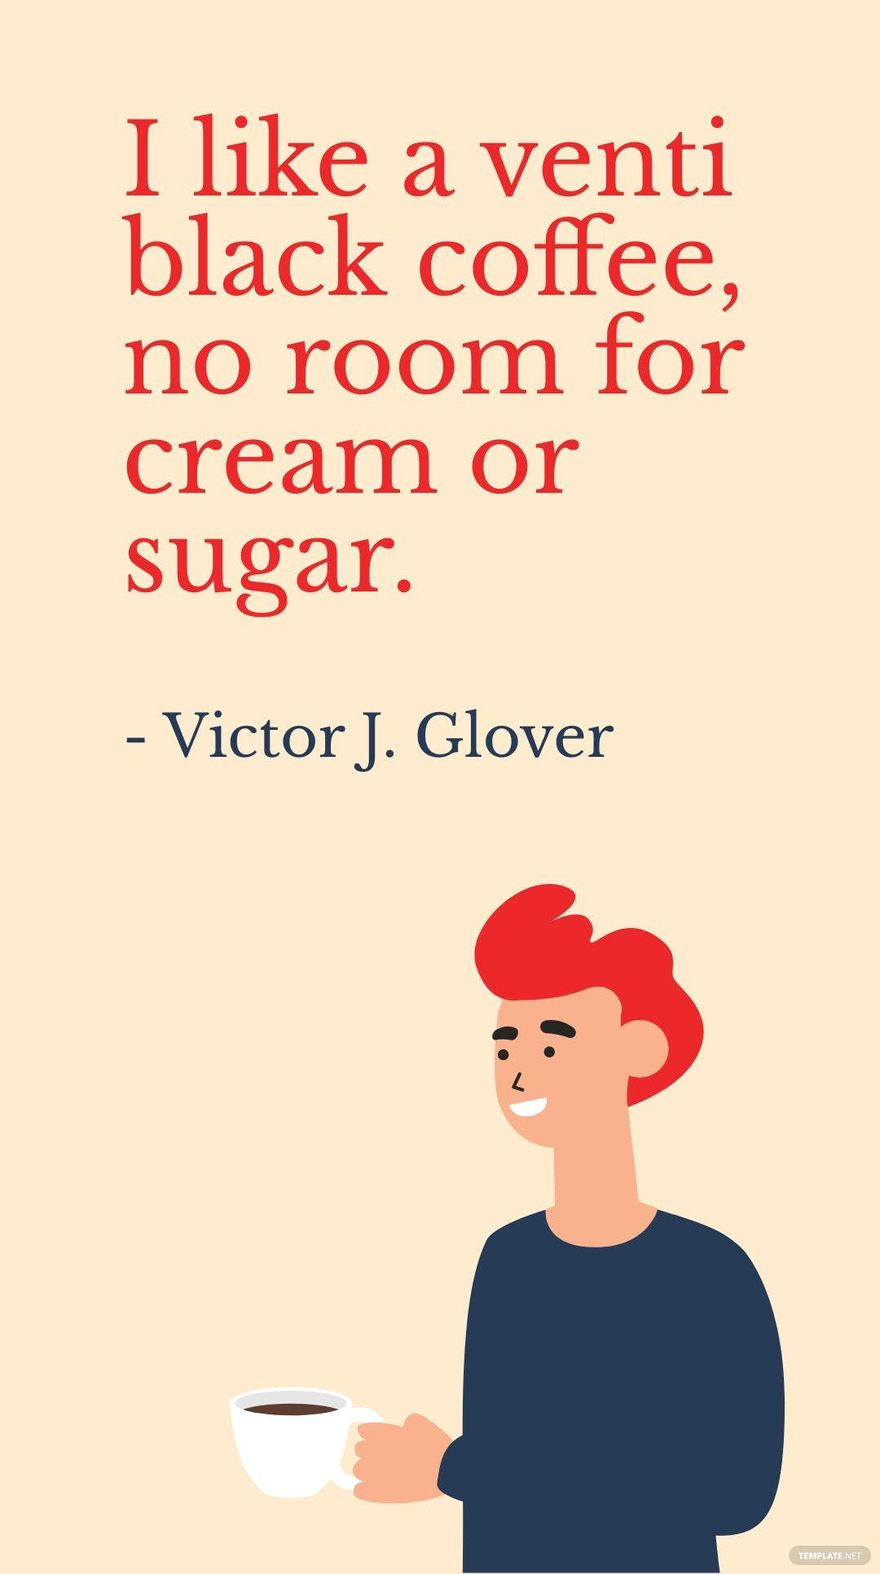 Victor J. Glover - I like a venti black coffee, no room for cream or sugar. in JPG